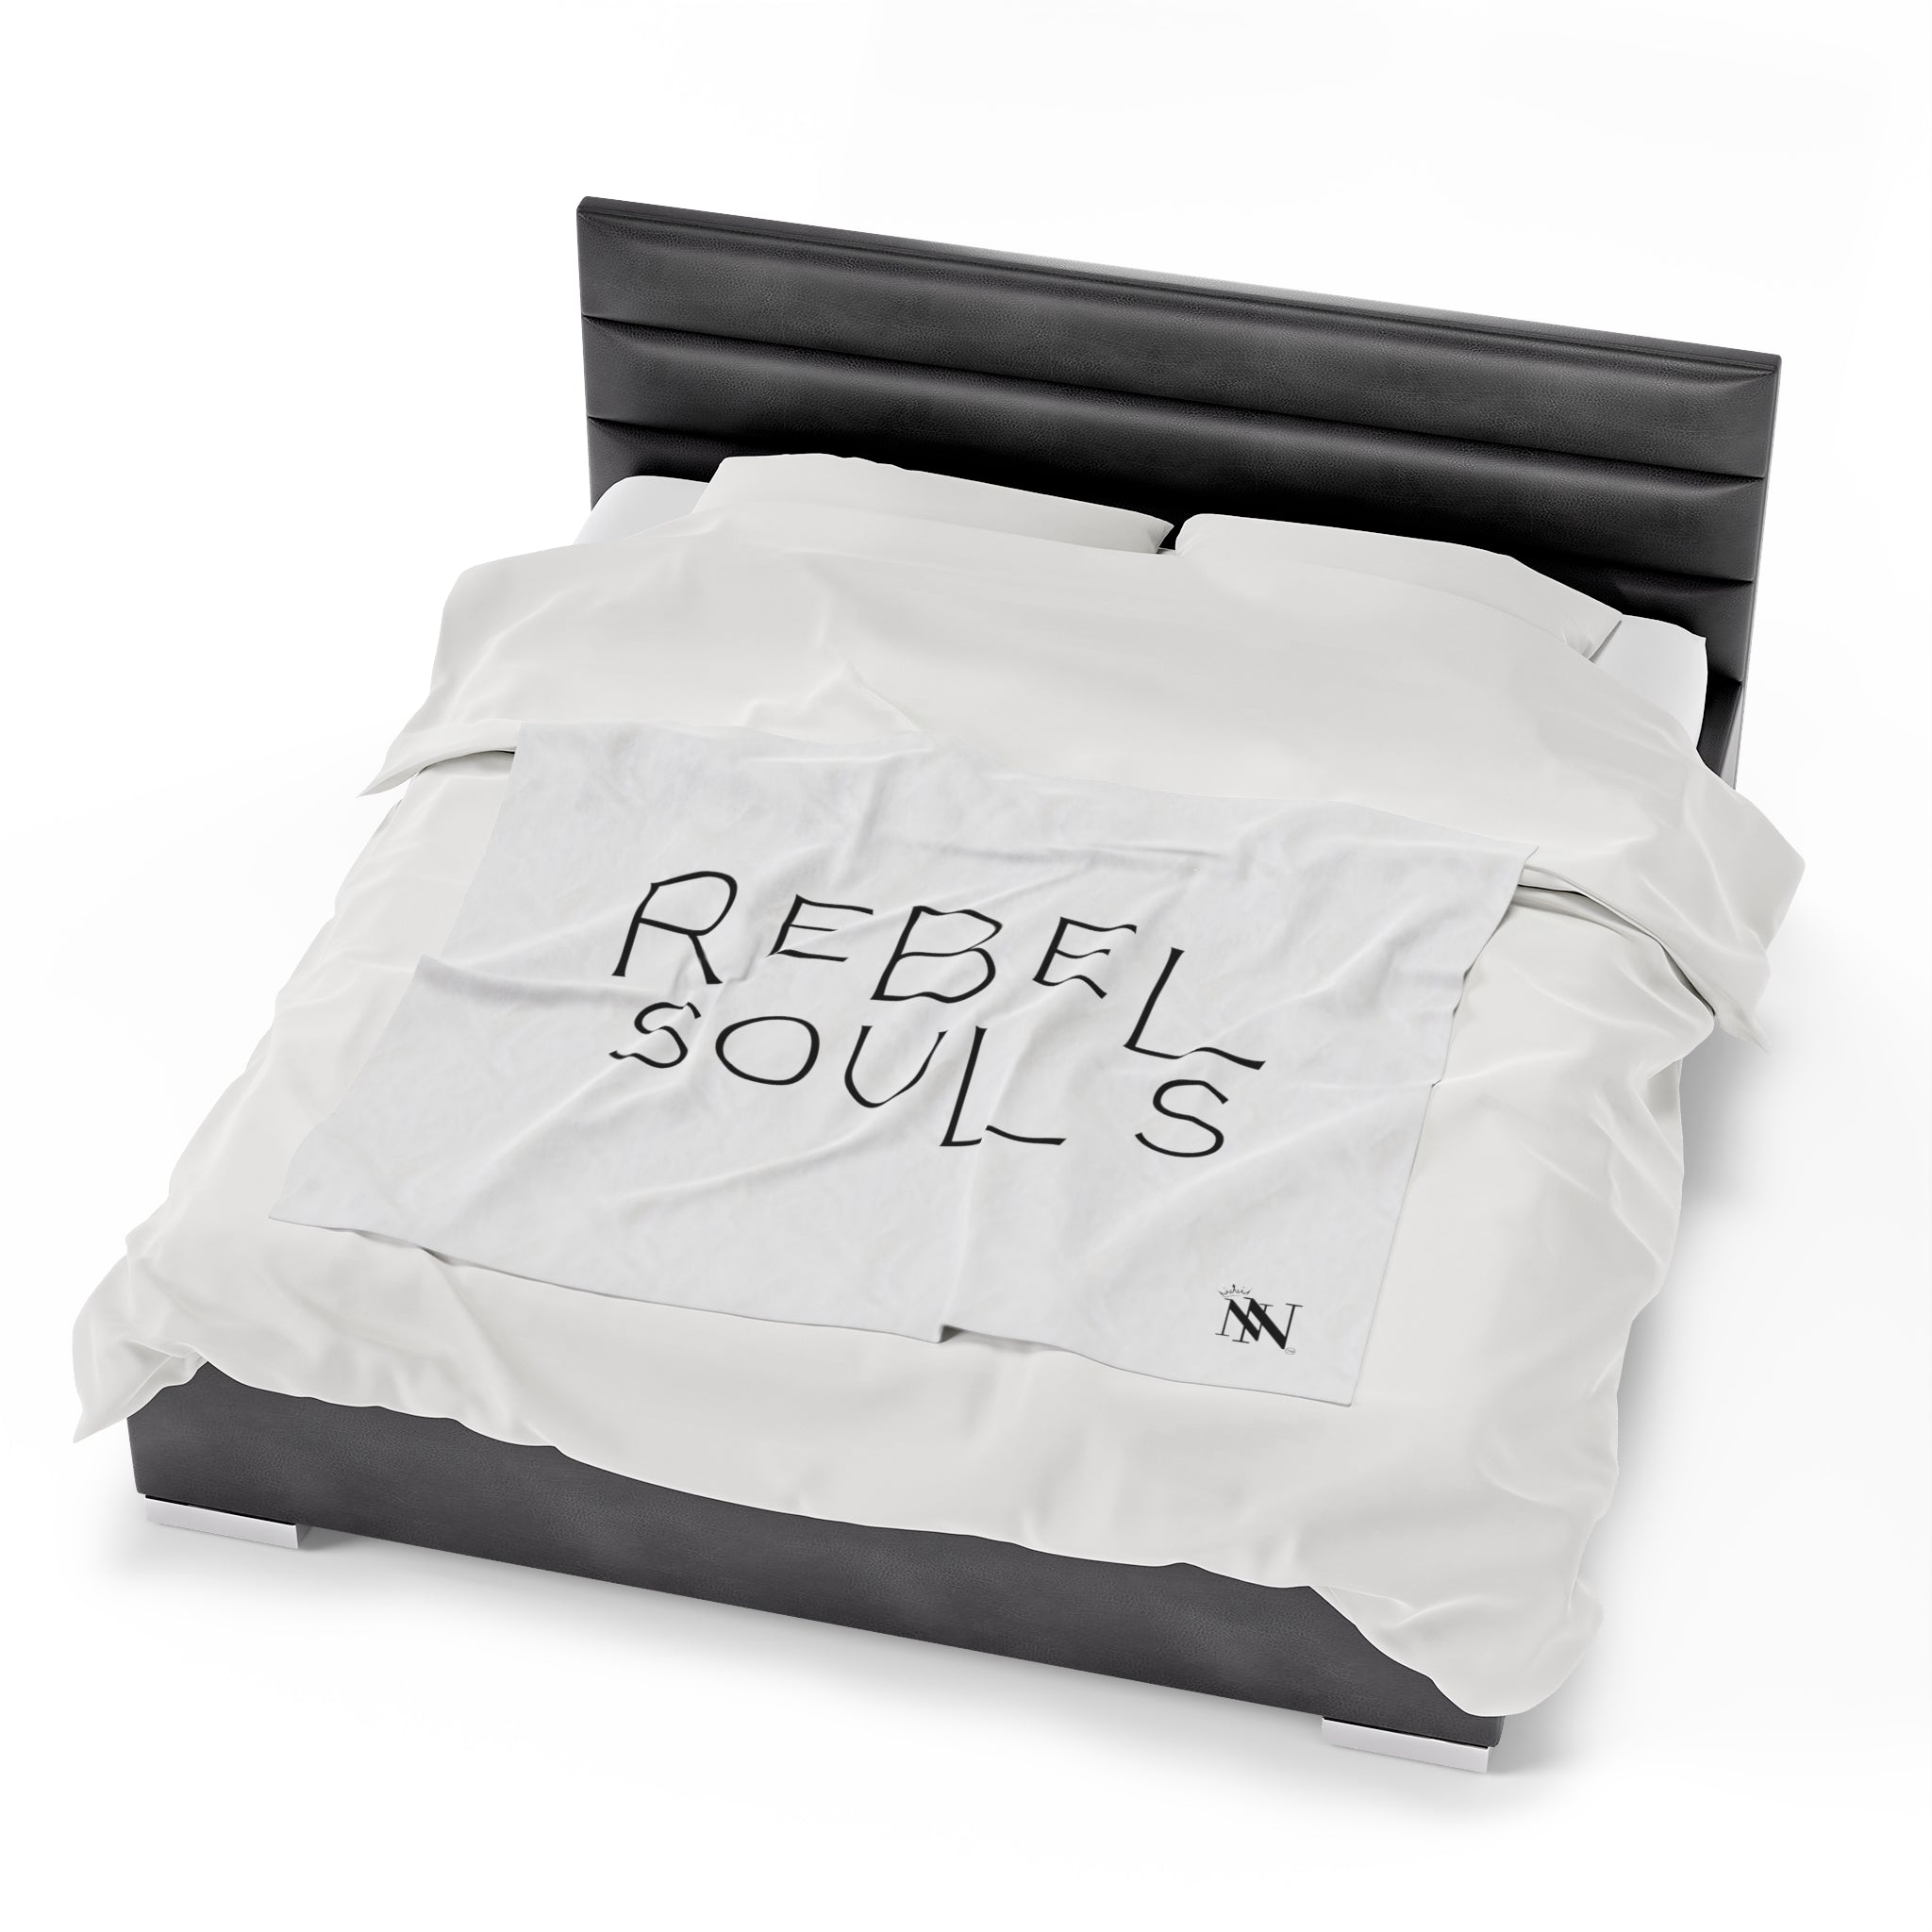 Rebel souls sex blanket